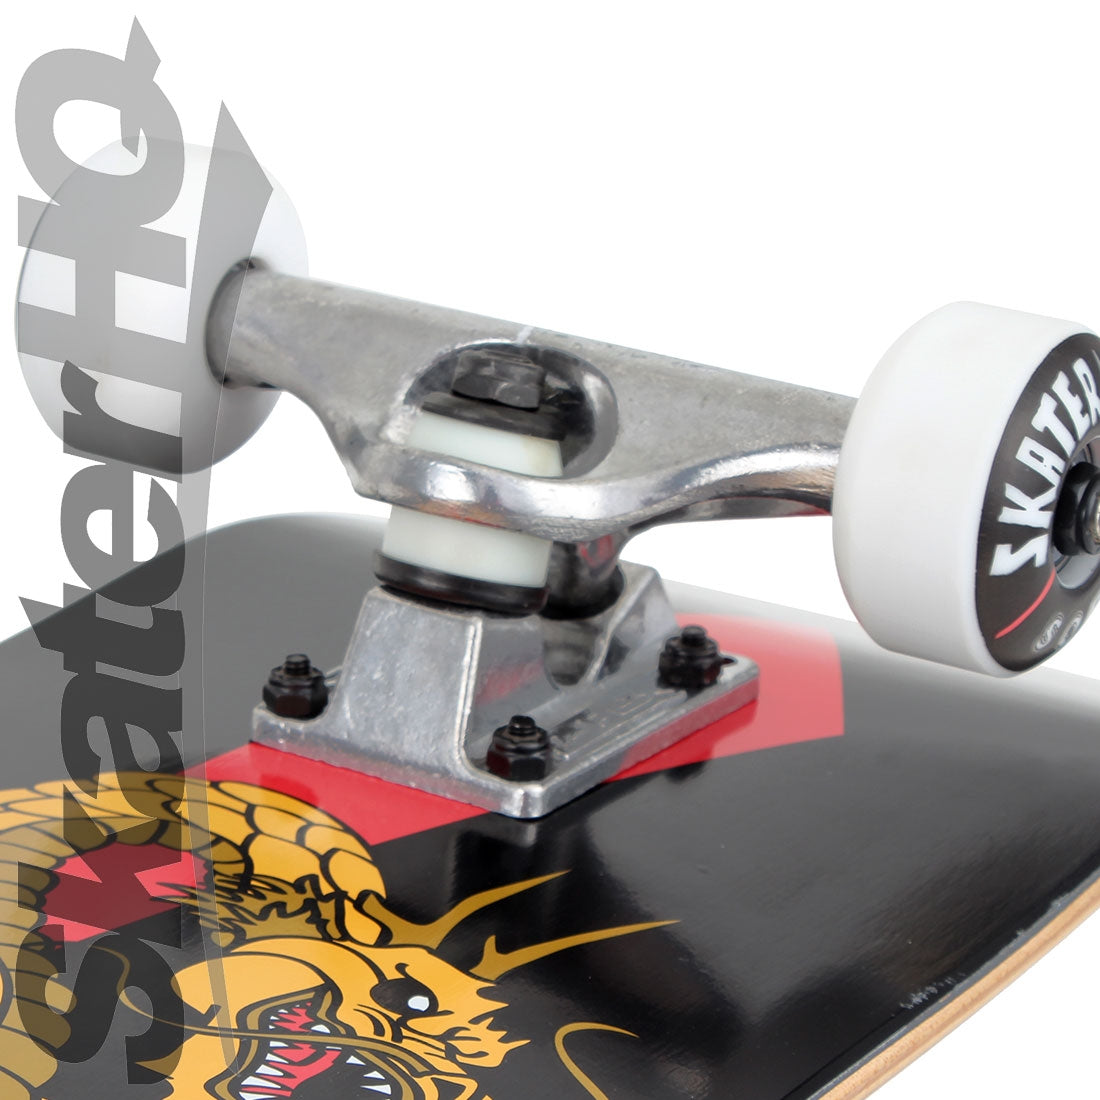 Skater HQ Swoosh Dragon 7.9 S Complete Skateboard Completes Modern Street